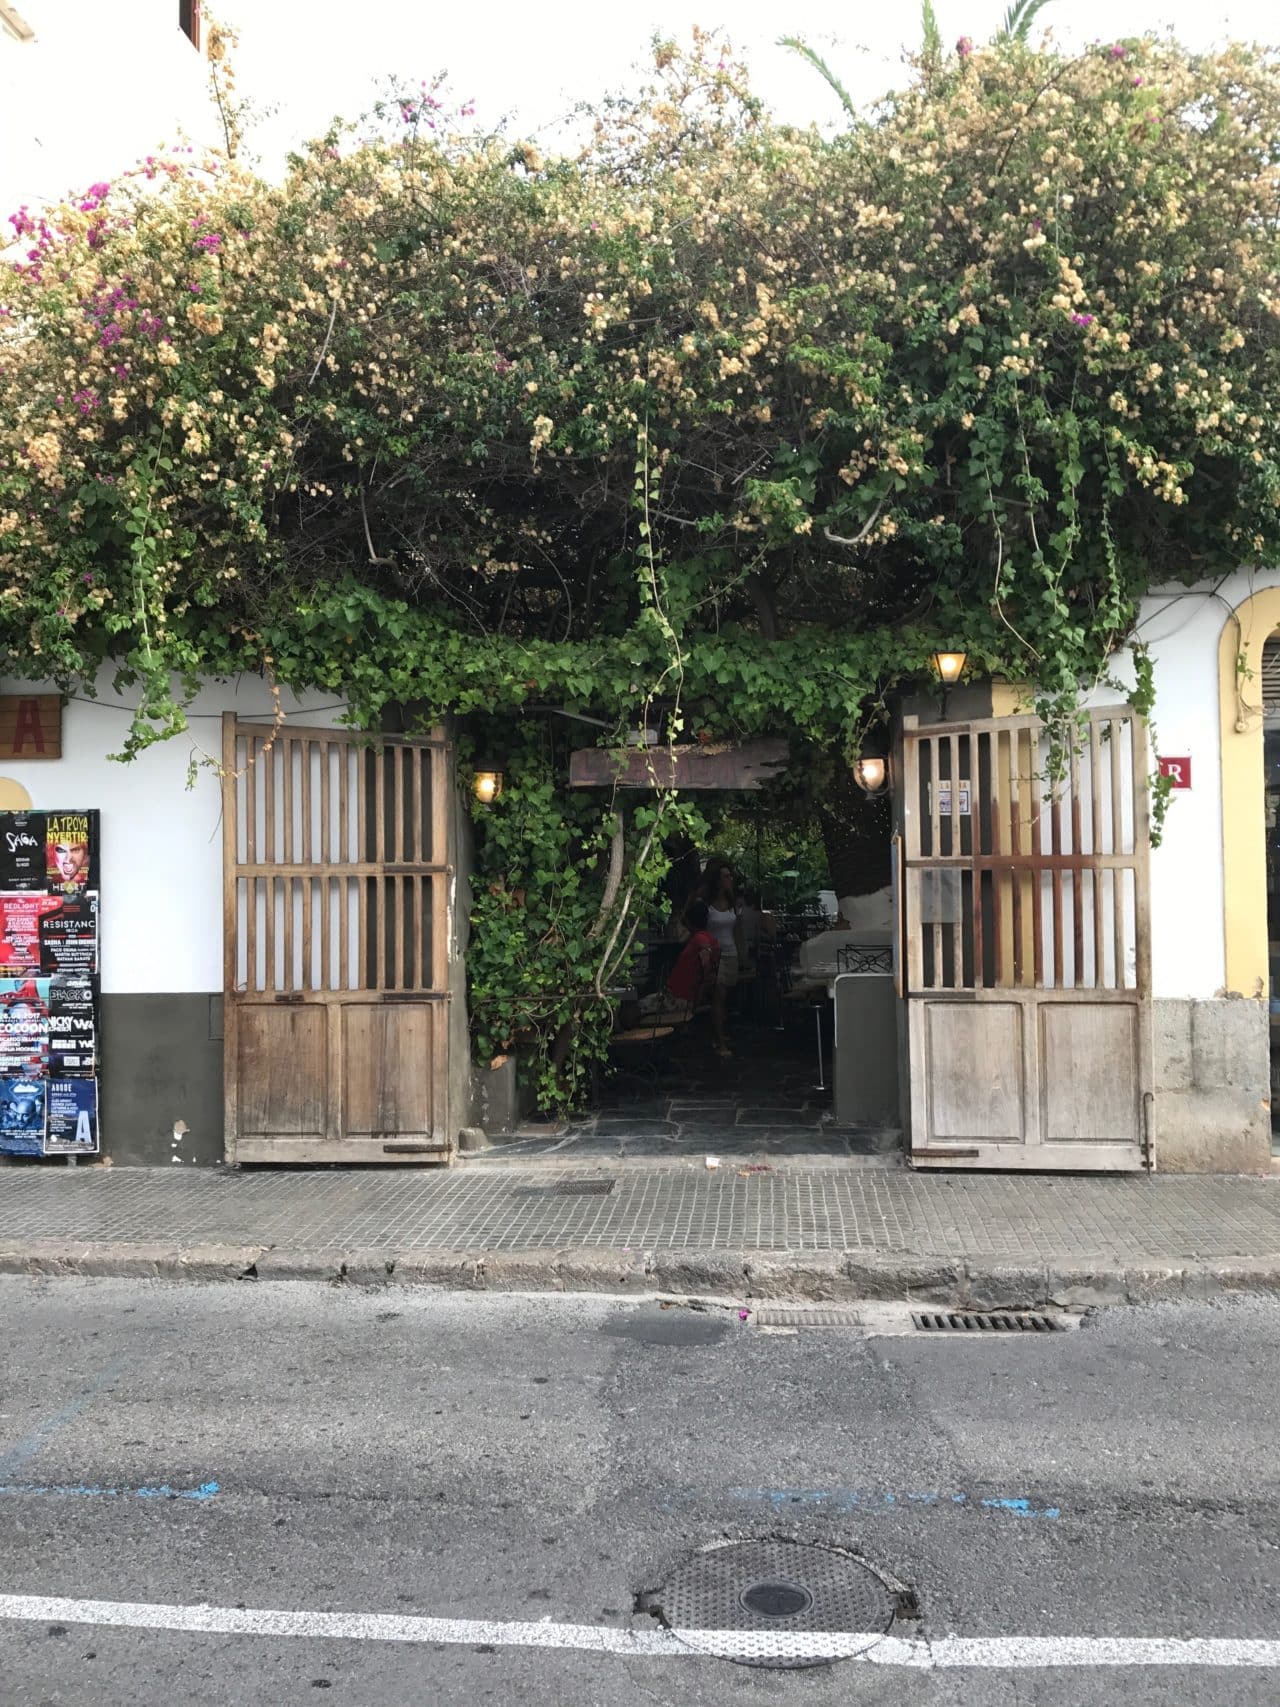 Small Vine-Decorate Restaurant Entrance On Street